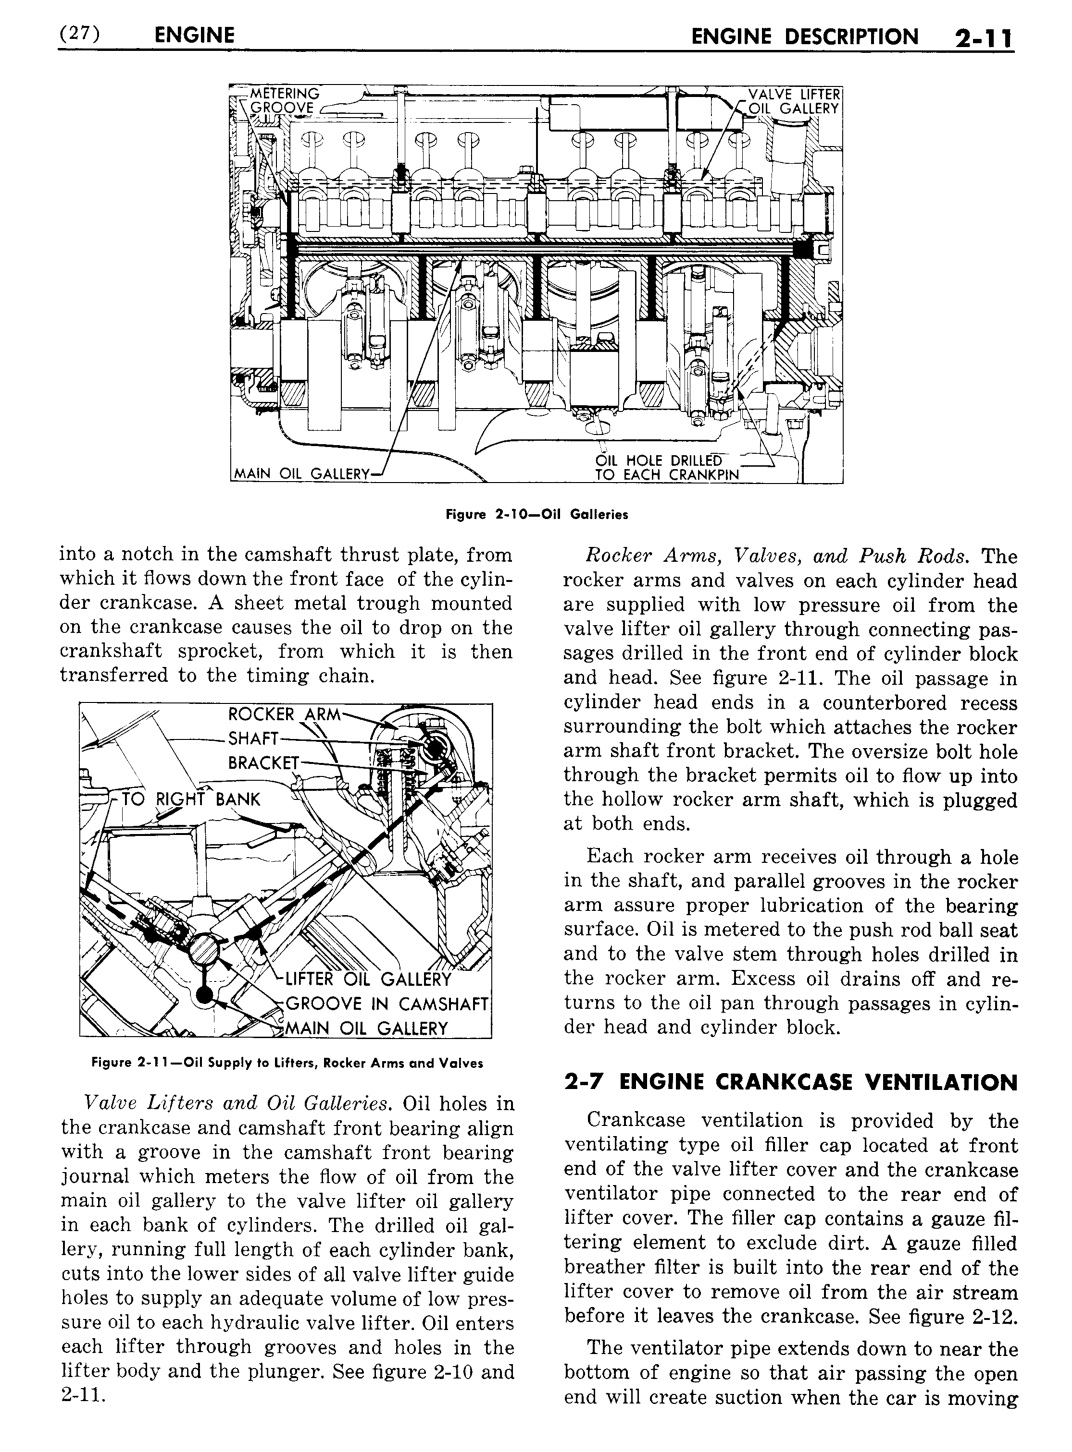 n_03 1954 Buick Shop Manual - Engine-011-011.jpg